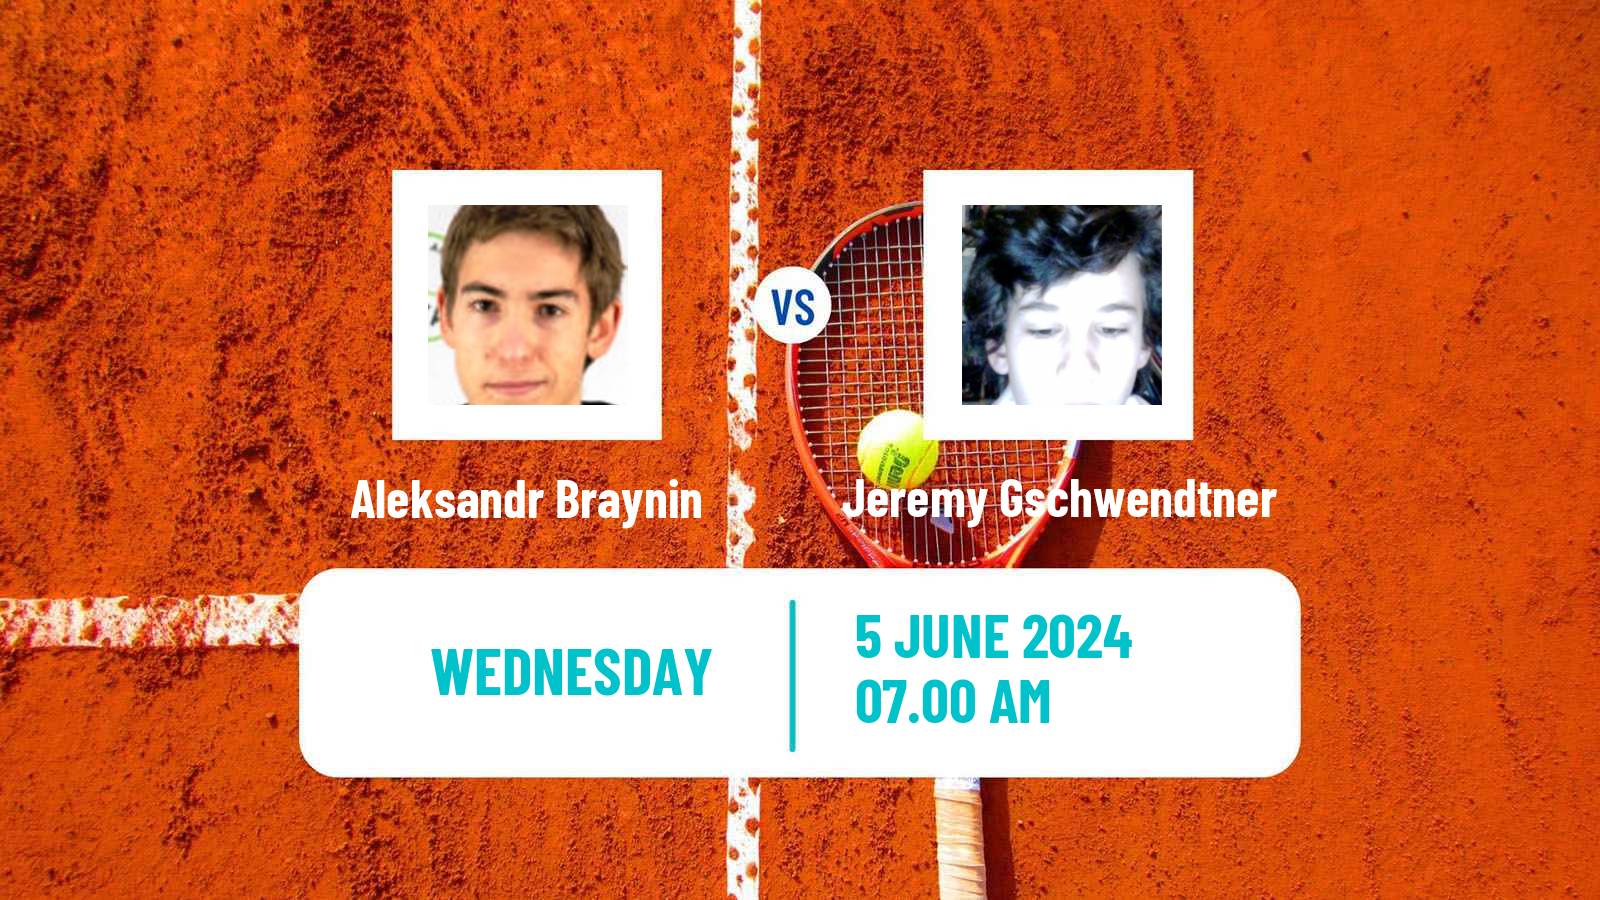 Tennis ITF M15 Grodzisk Mazowiecki Men Aleksandr Braynin - Jeremy Gschwendtner